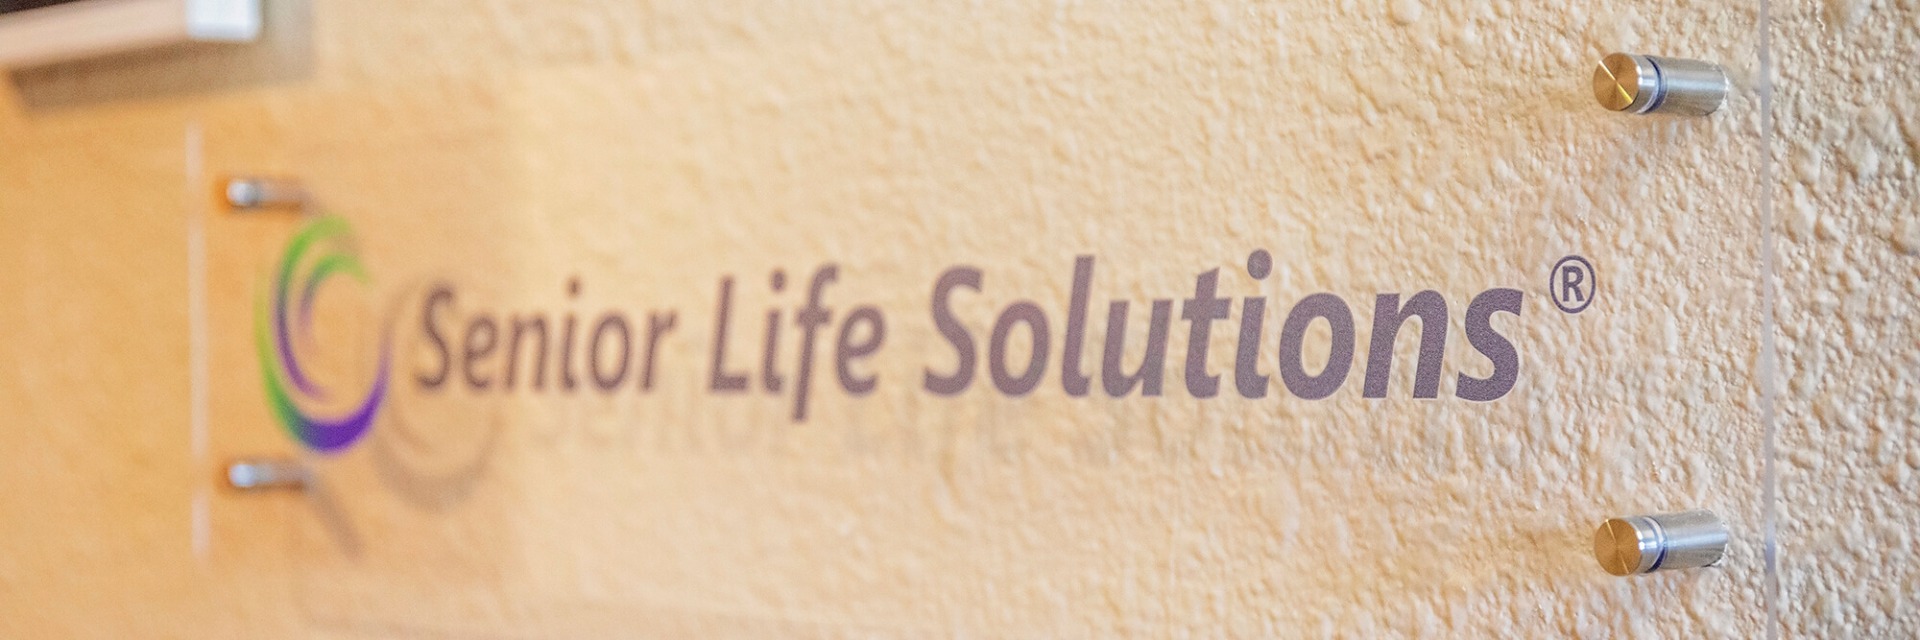 Senior Life Solutions sign at Van Buren County Hospital.